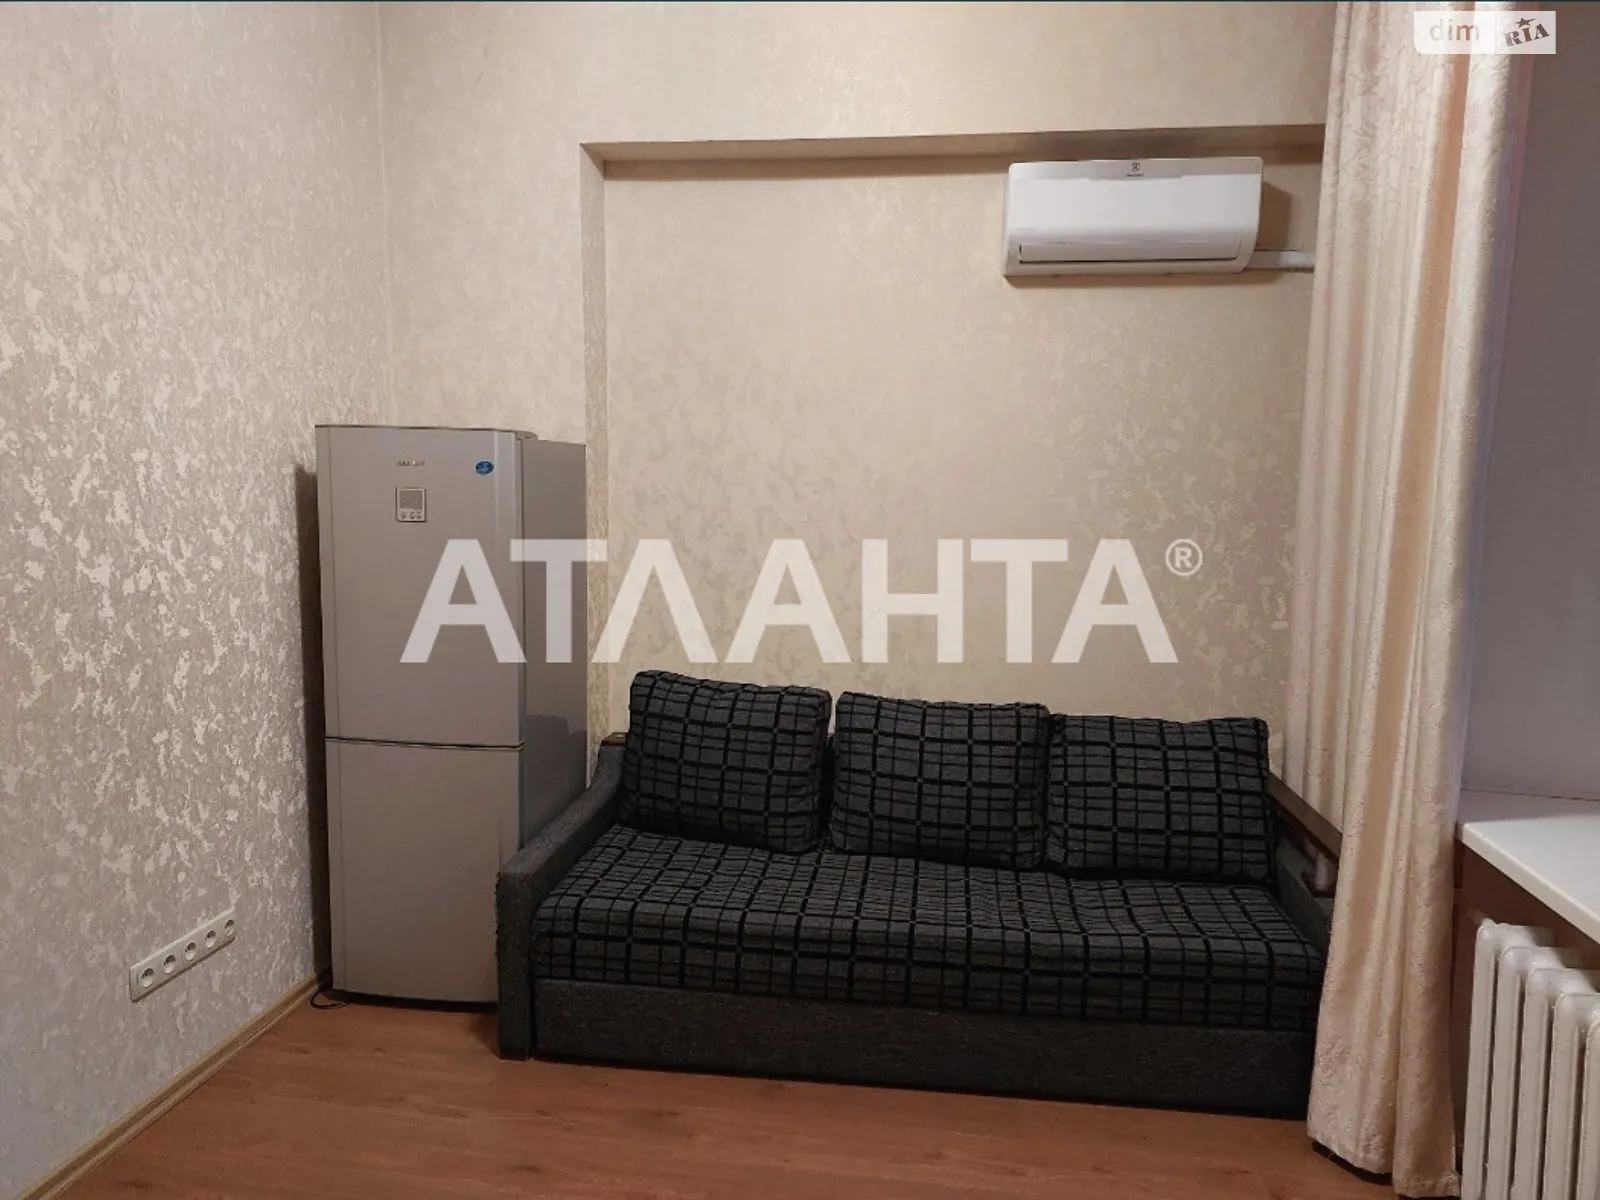 Продается комната 11 кв. м в Одессе, цена: 7000 $ - фото 1